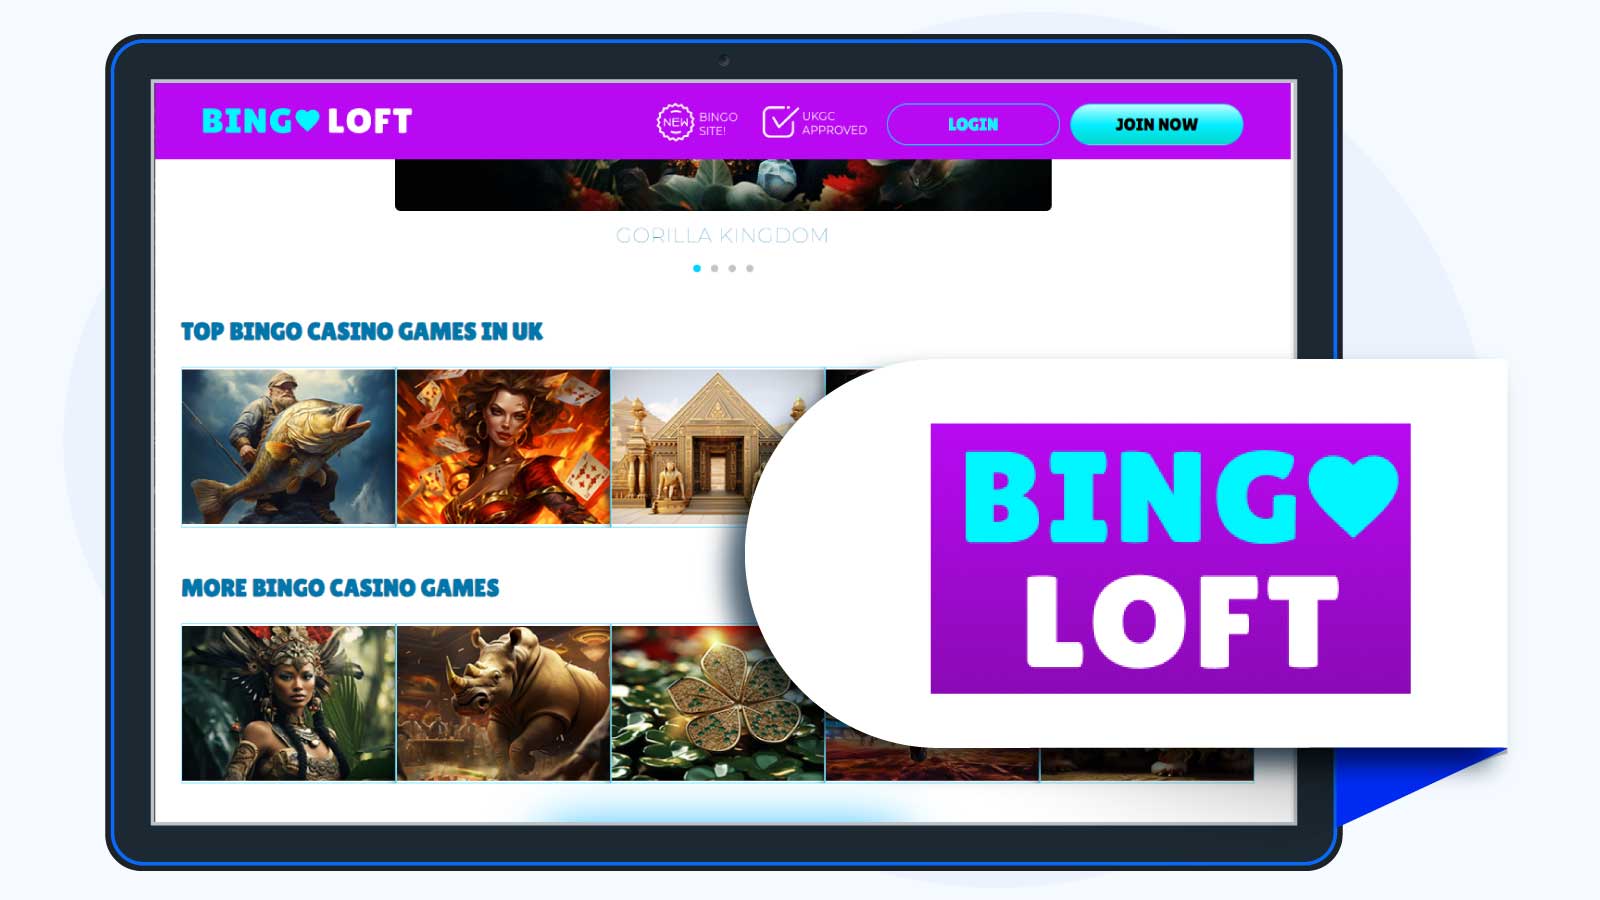 Bingo Loft Play with £30 + 60 free spins on 1st deposit